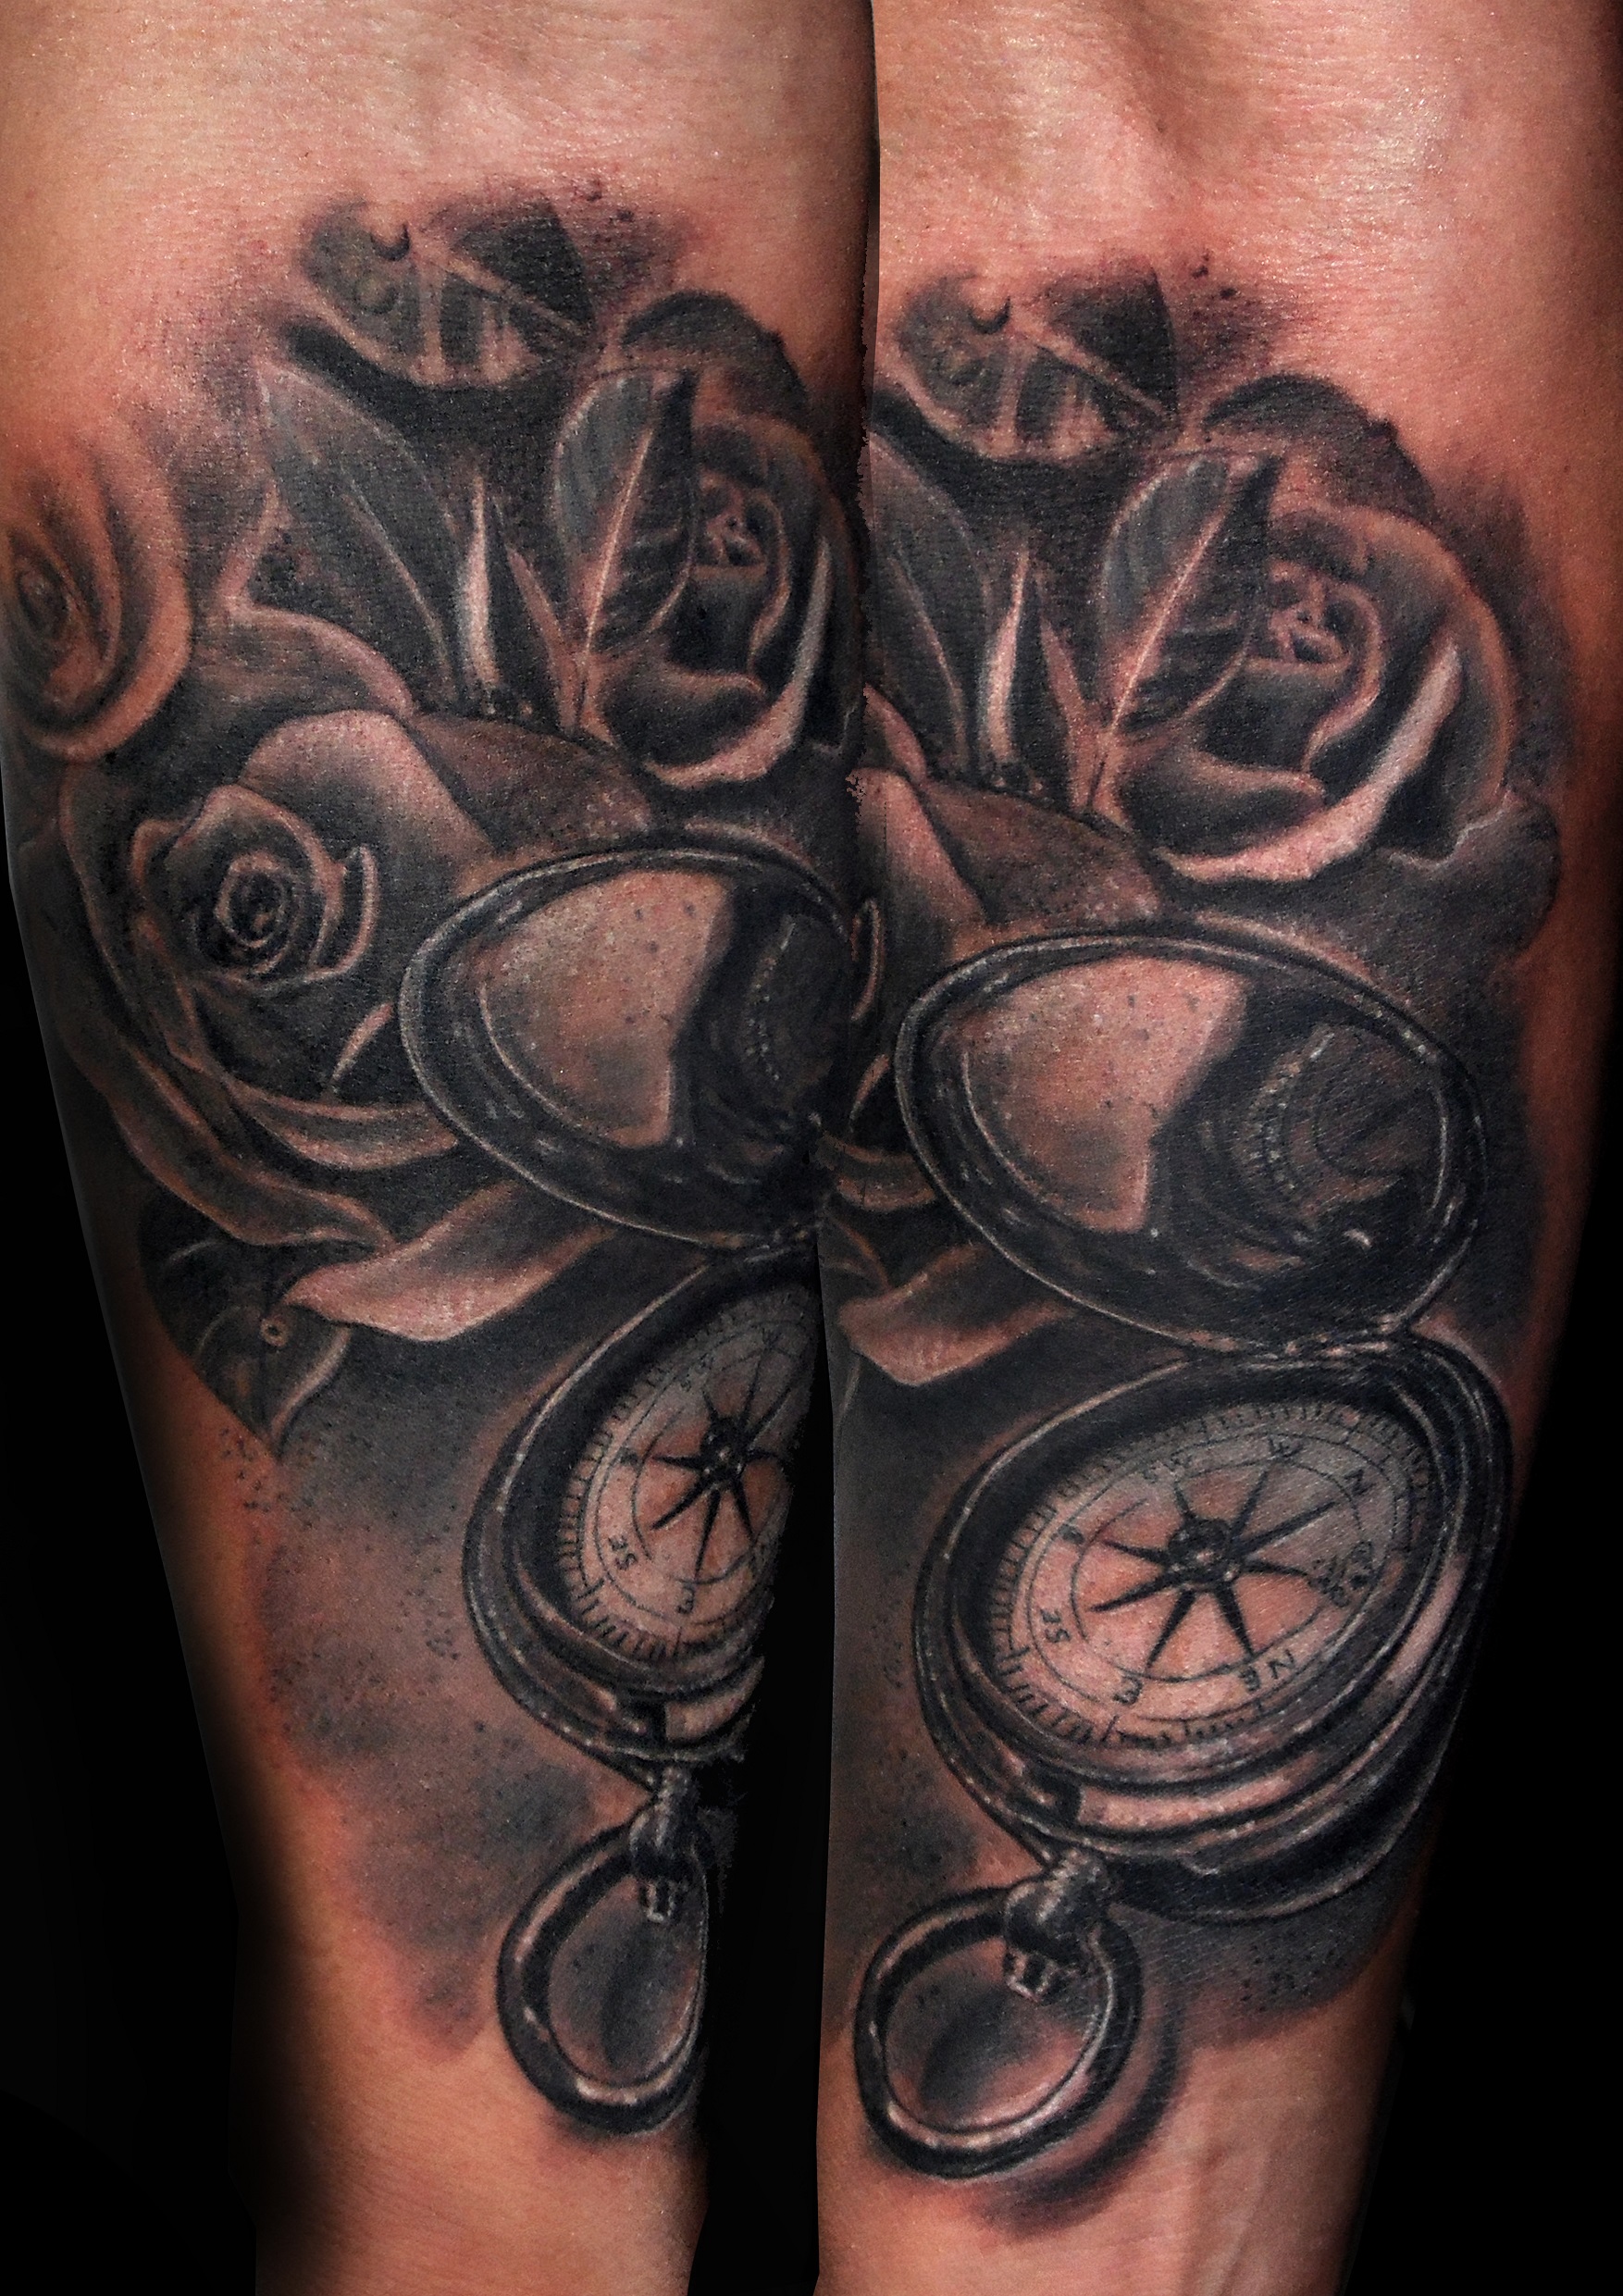 tattoo brujula rosas 13depicas tatuajes huesca jaca spain españa tatuajes ink antebrazo realista